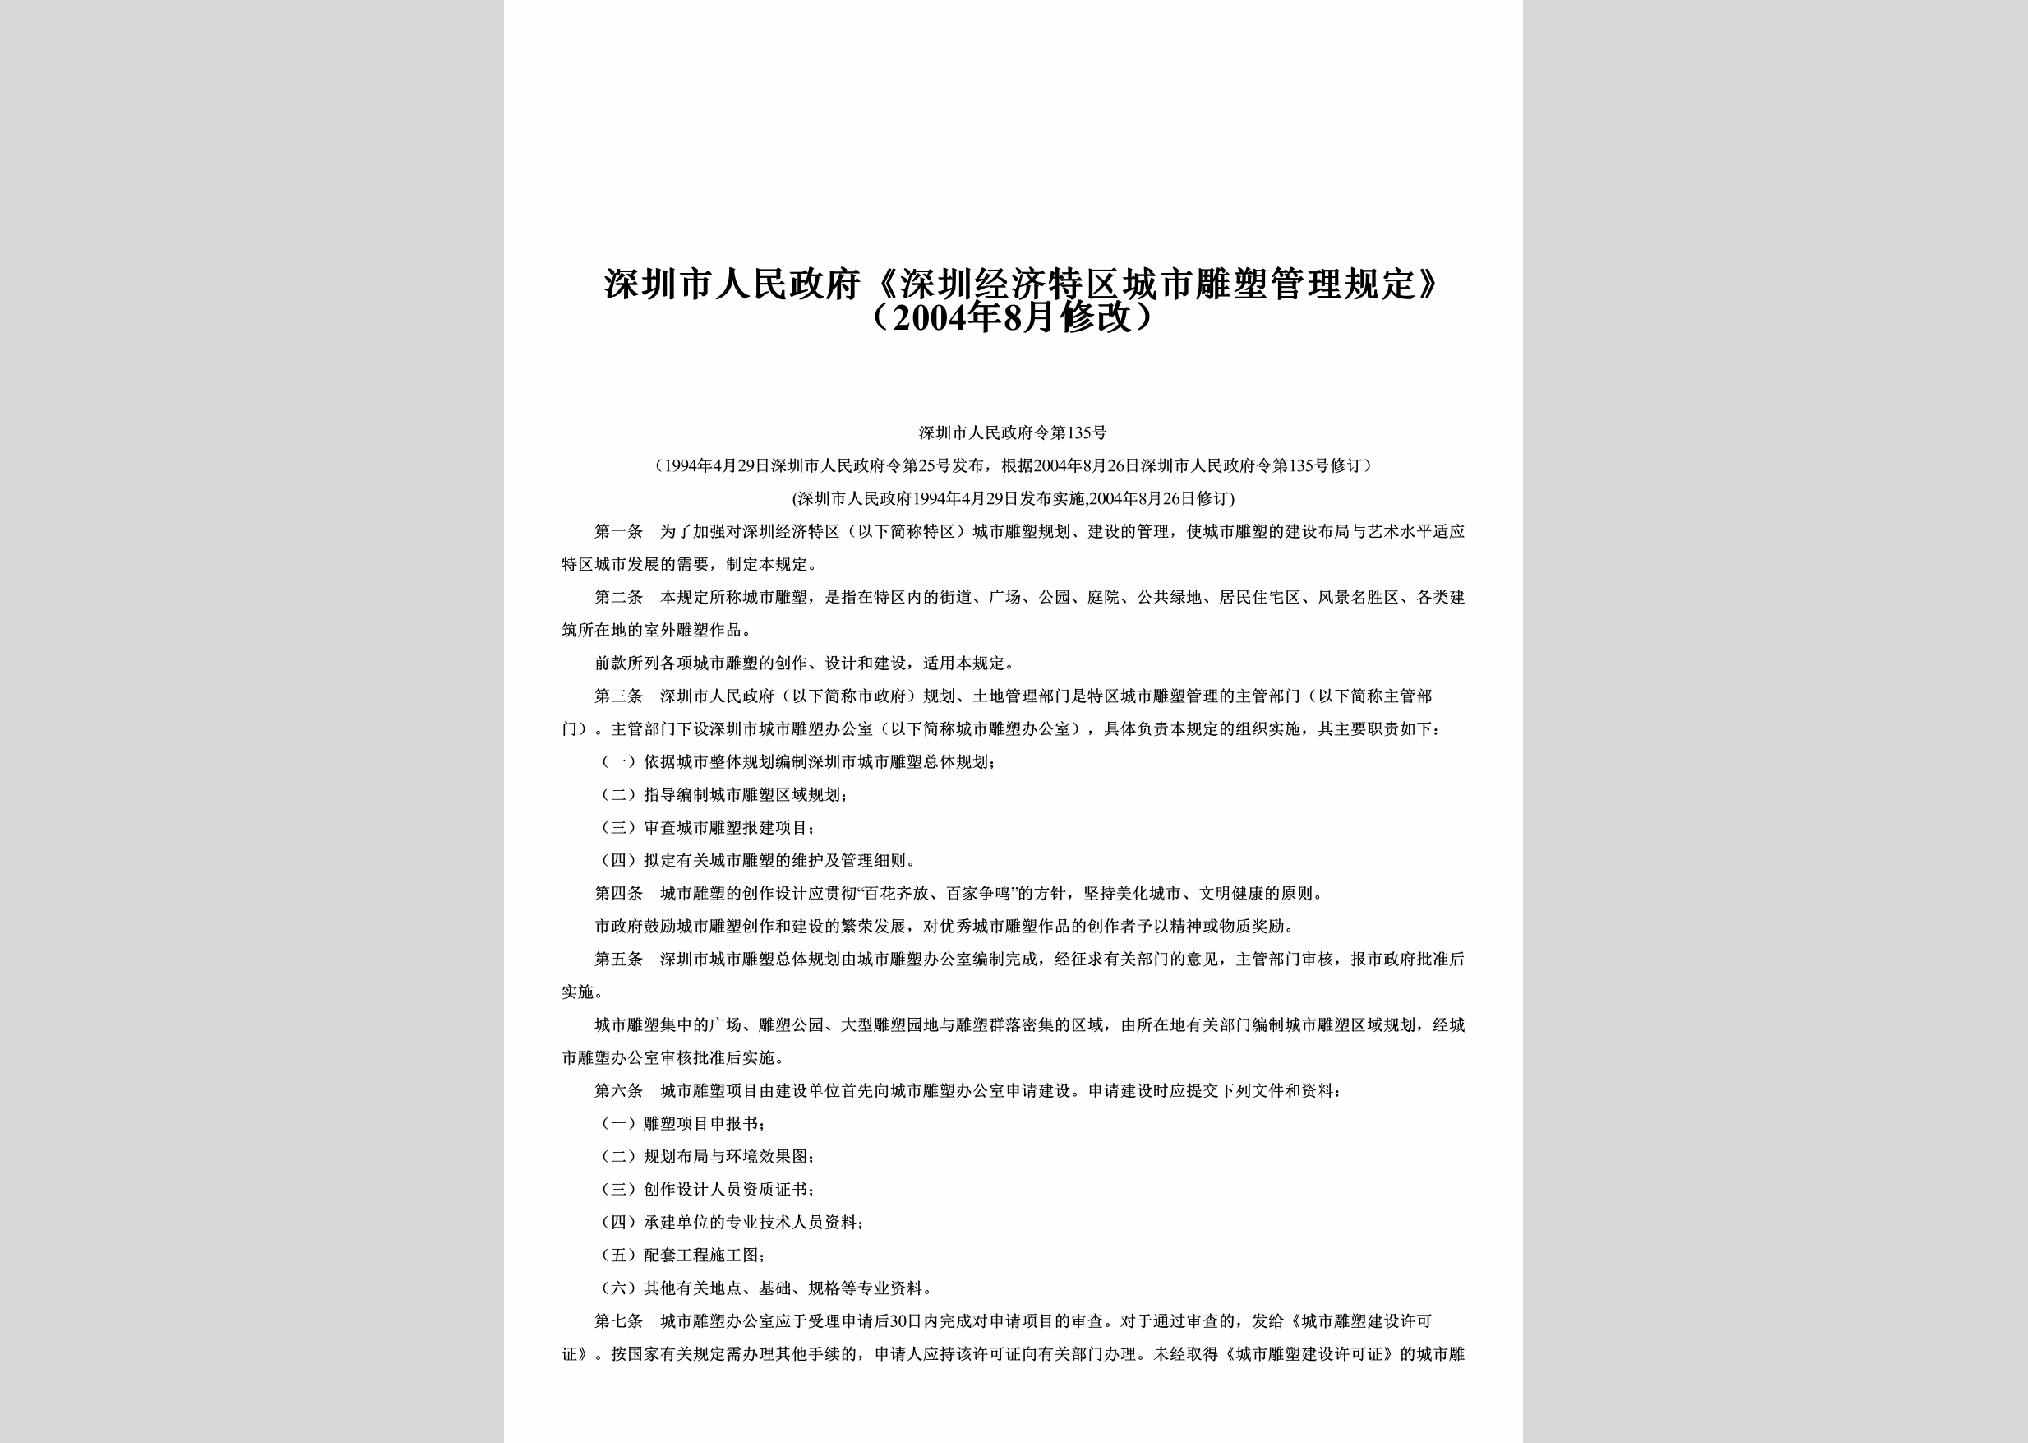 SZSRMZFL-2008-135：《深圳经济特区城市雕塑管理规定》（2004年8月修改）